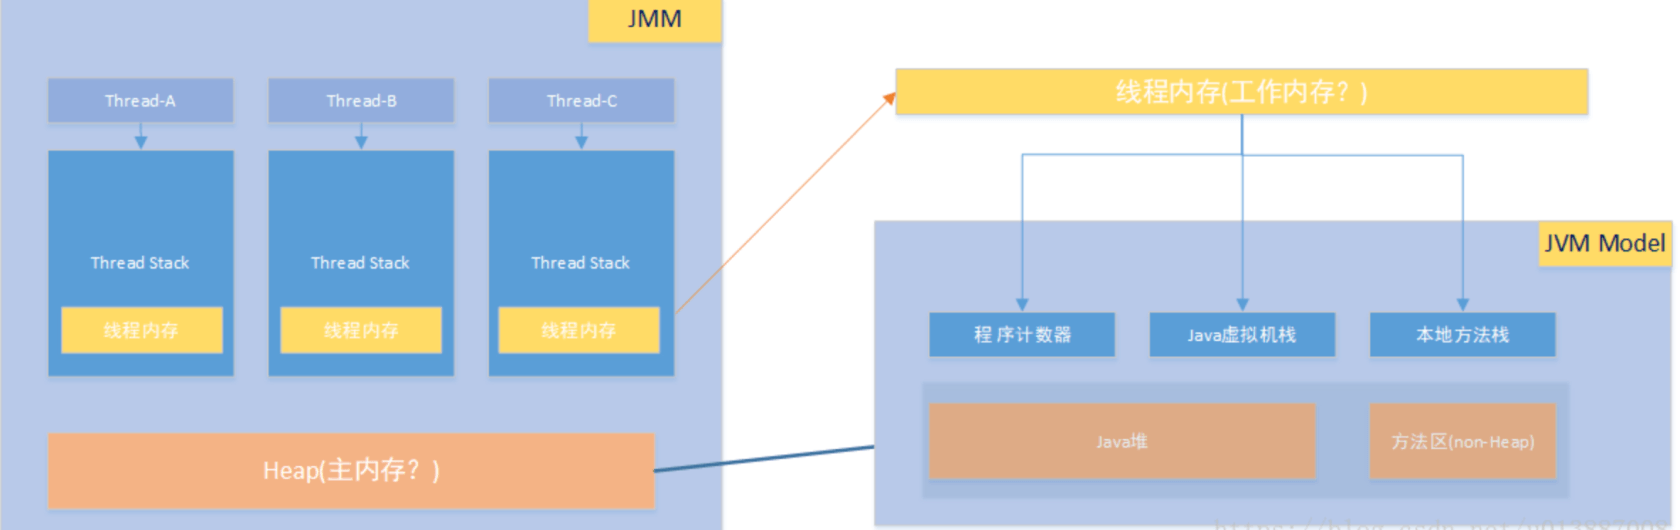 JMM Java 内存模型